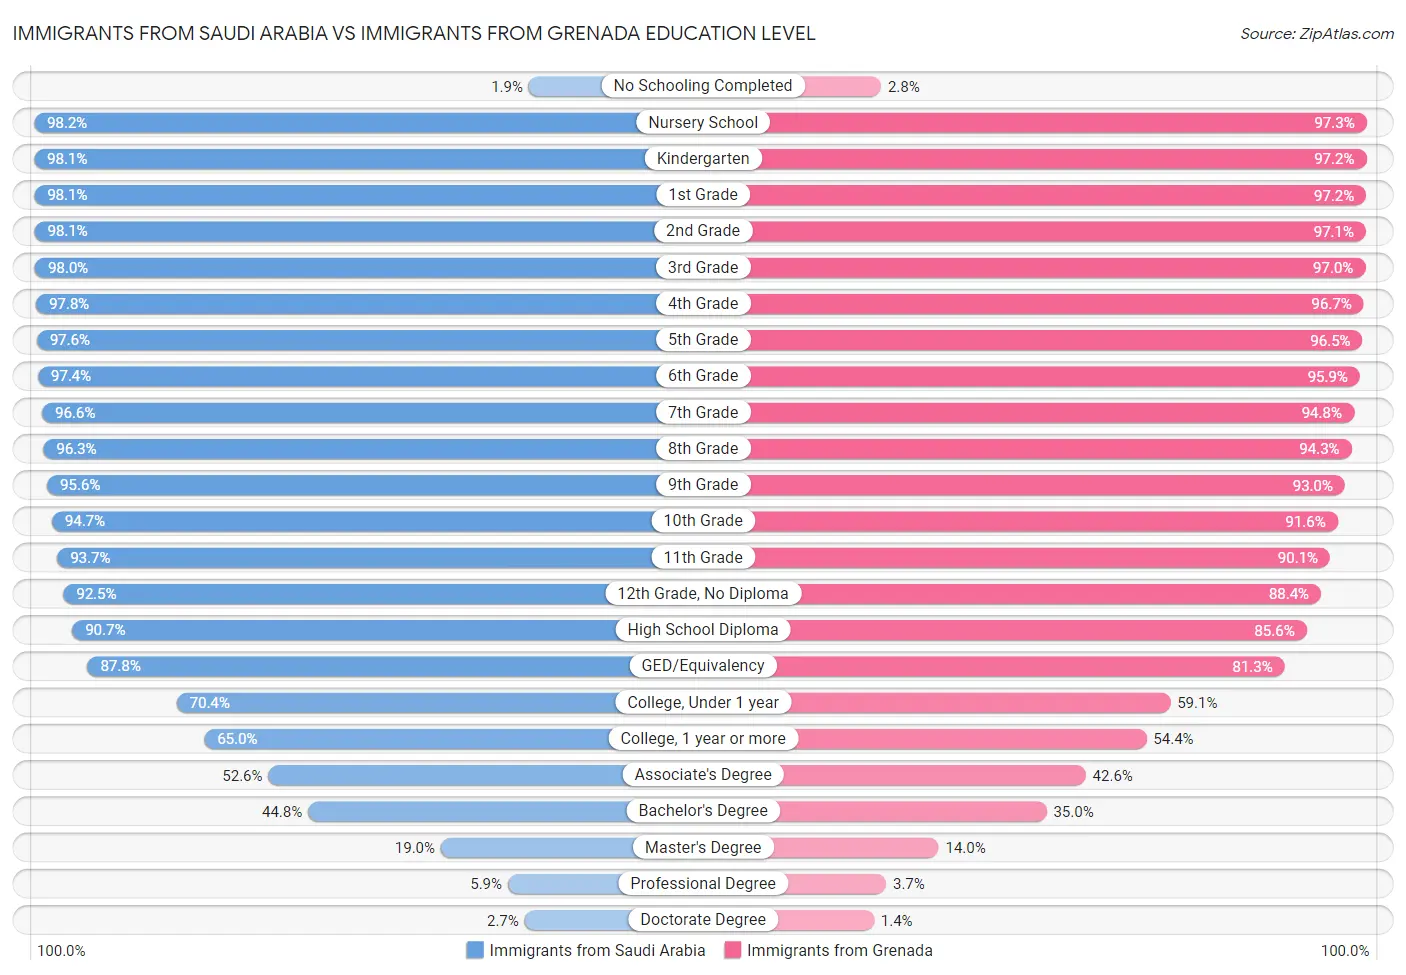 Immigrants from Saudi Arabia vs Immigrants from Grenada Education Level